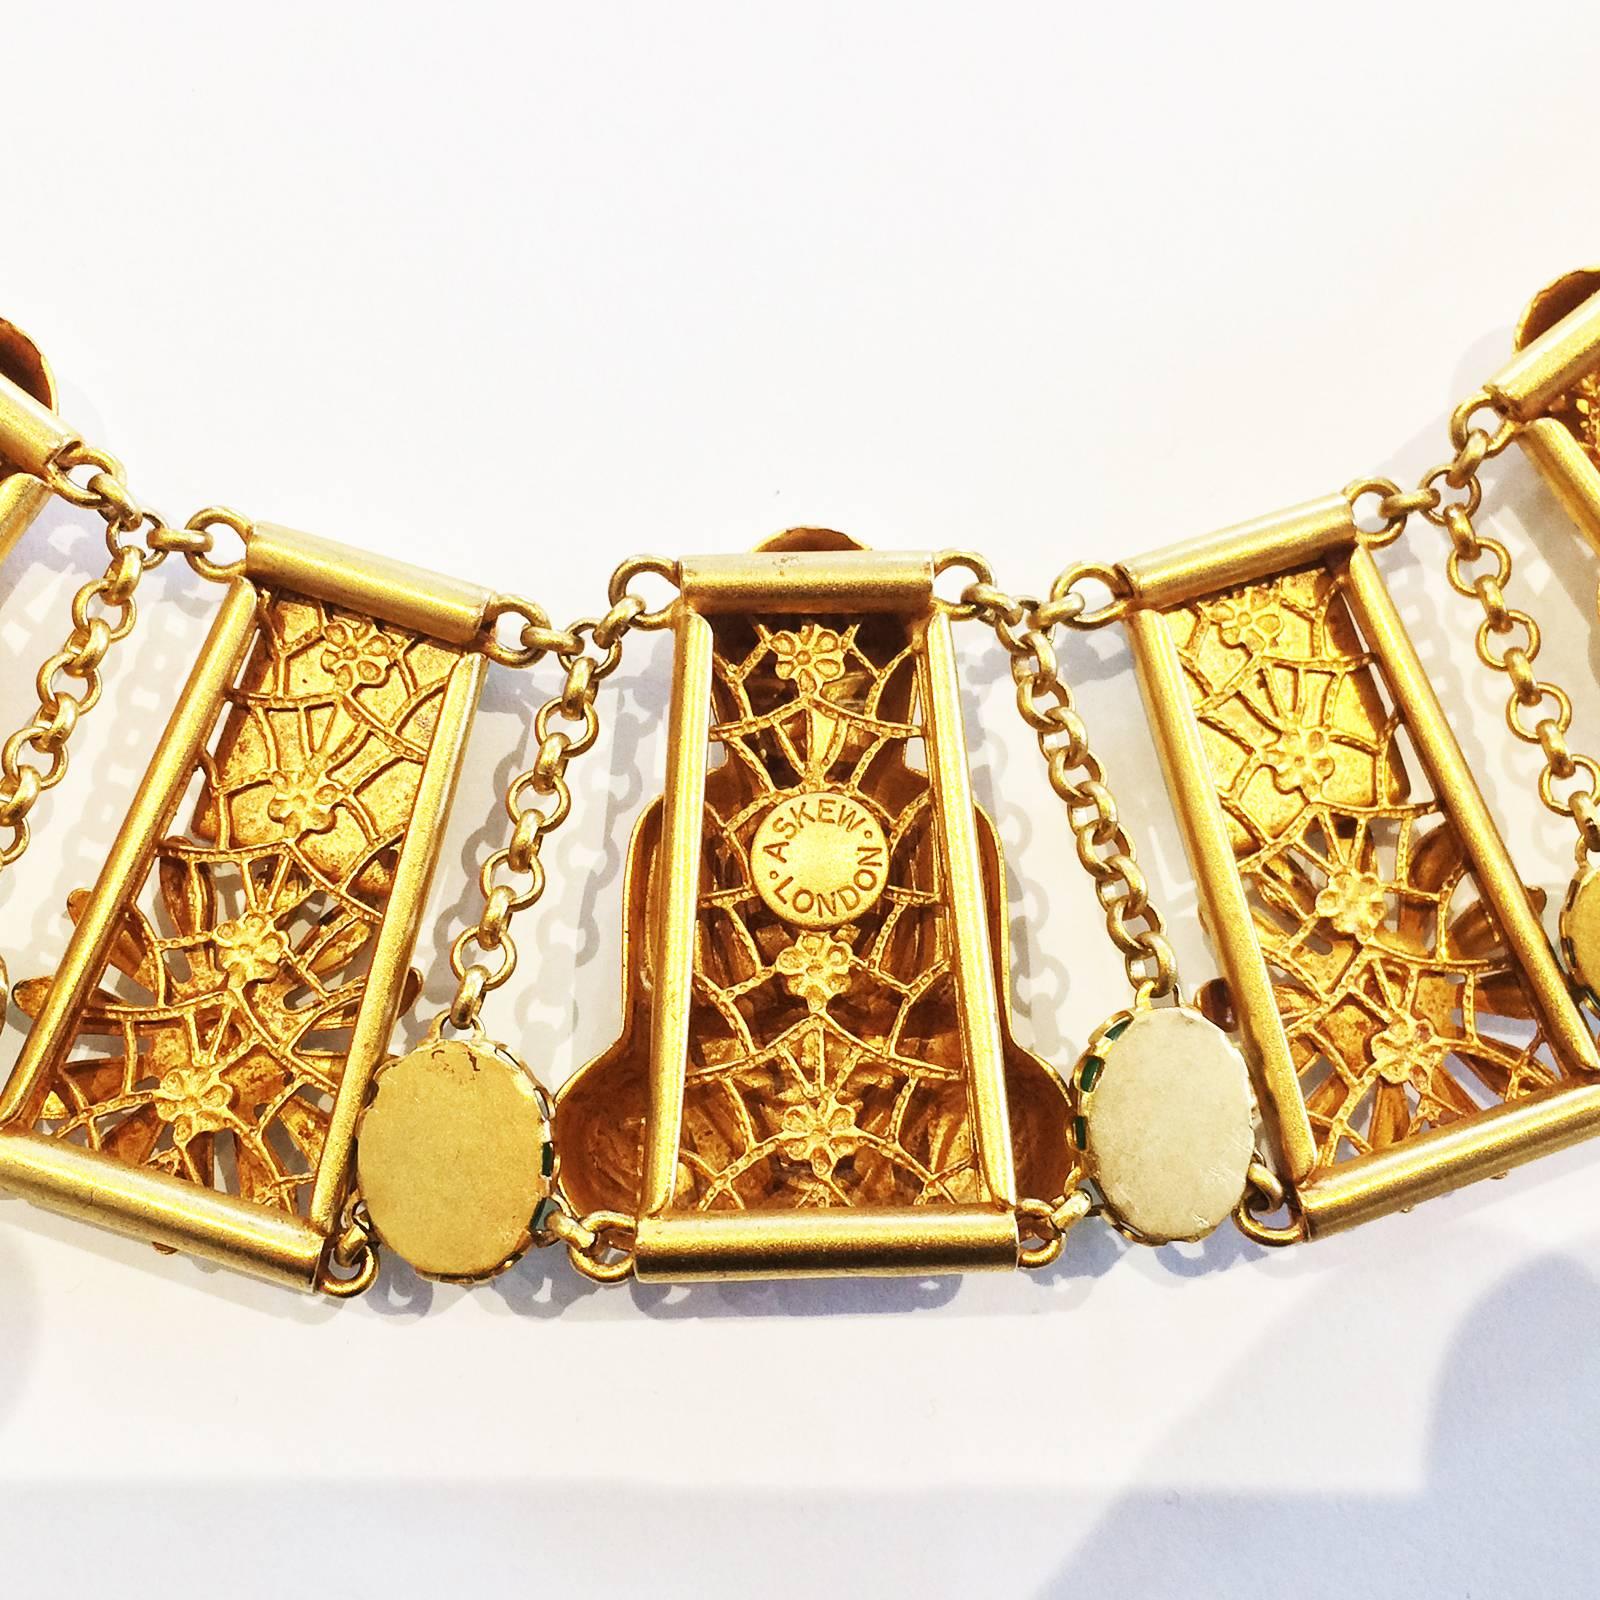 Women's An Askew of London Buddha necklace